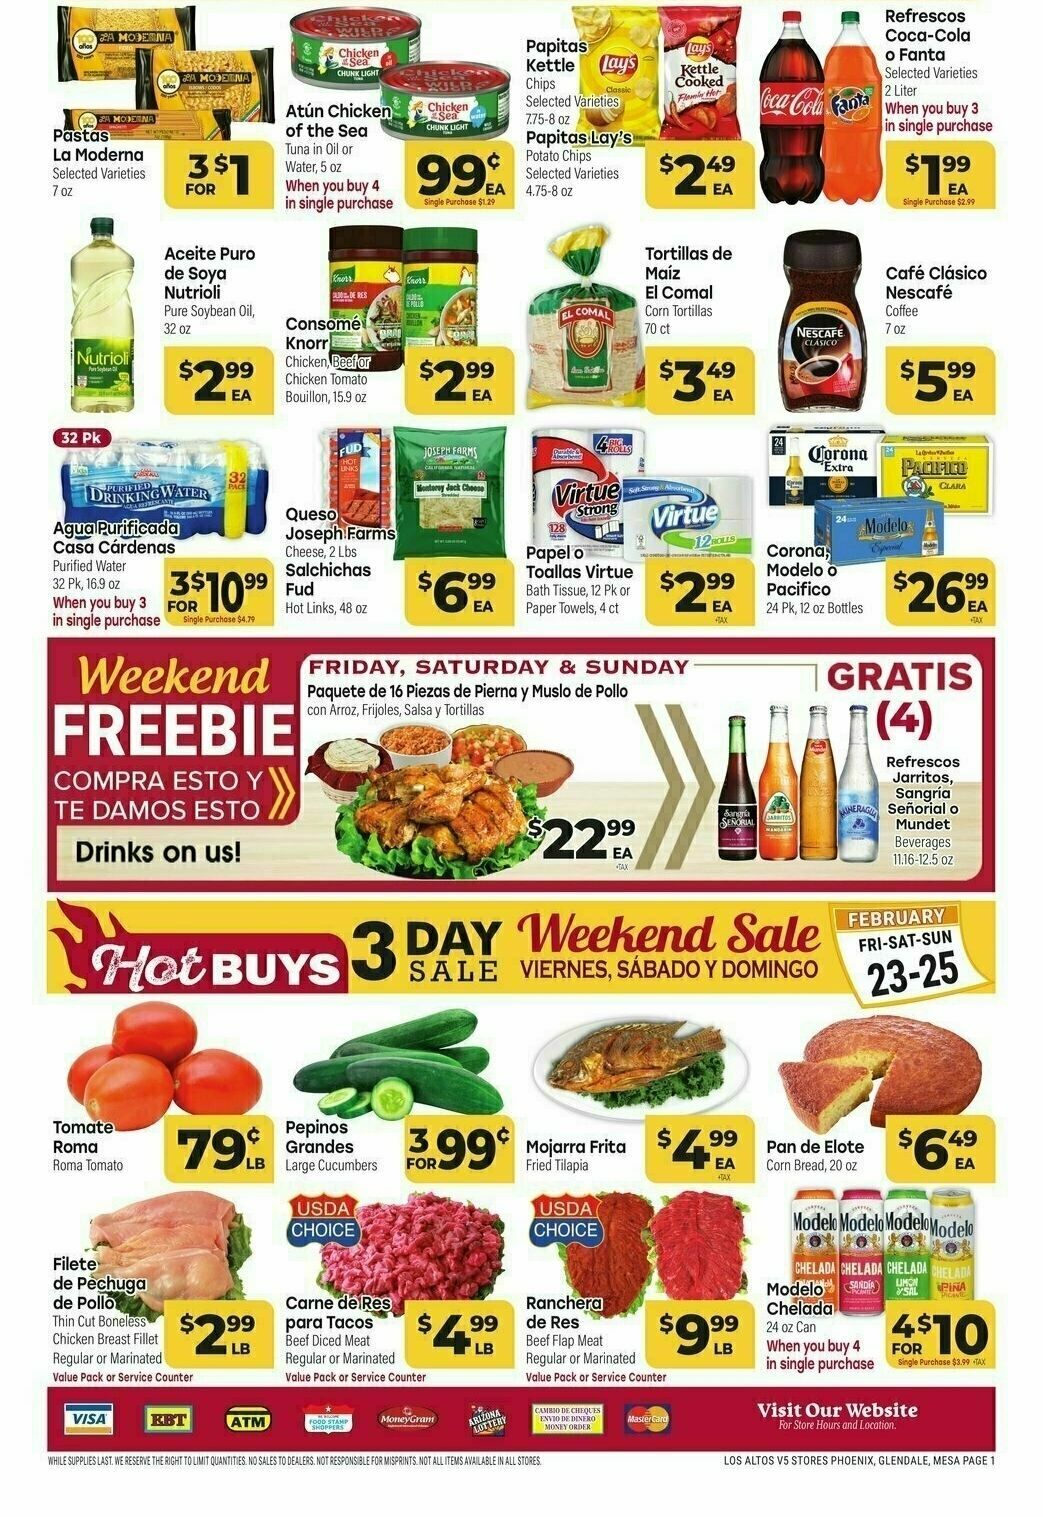 Cardenas Market Weekly Ad from February 21